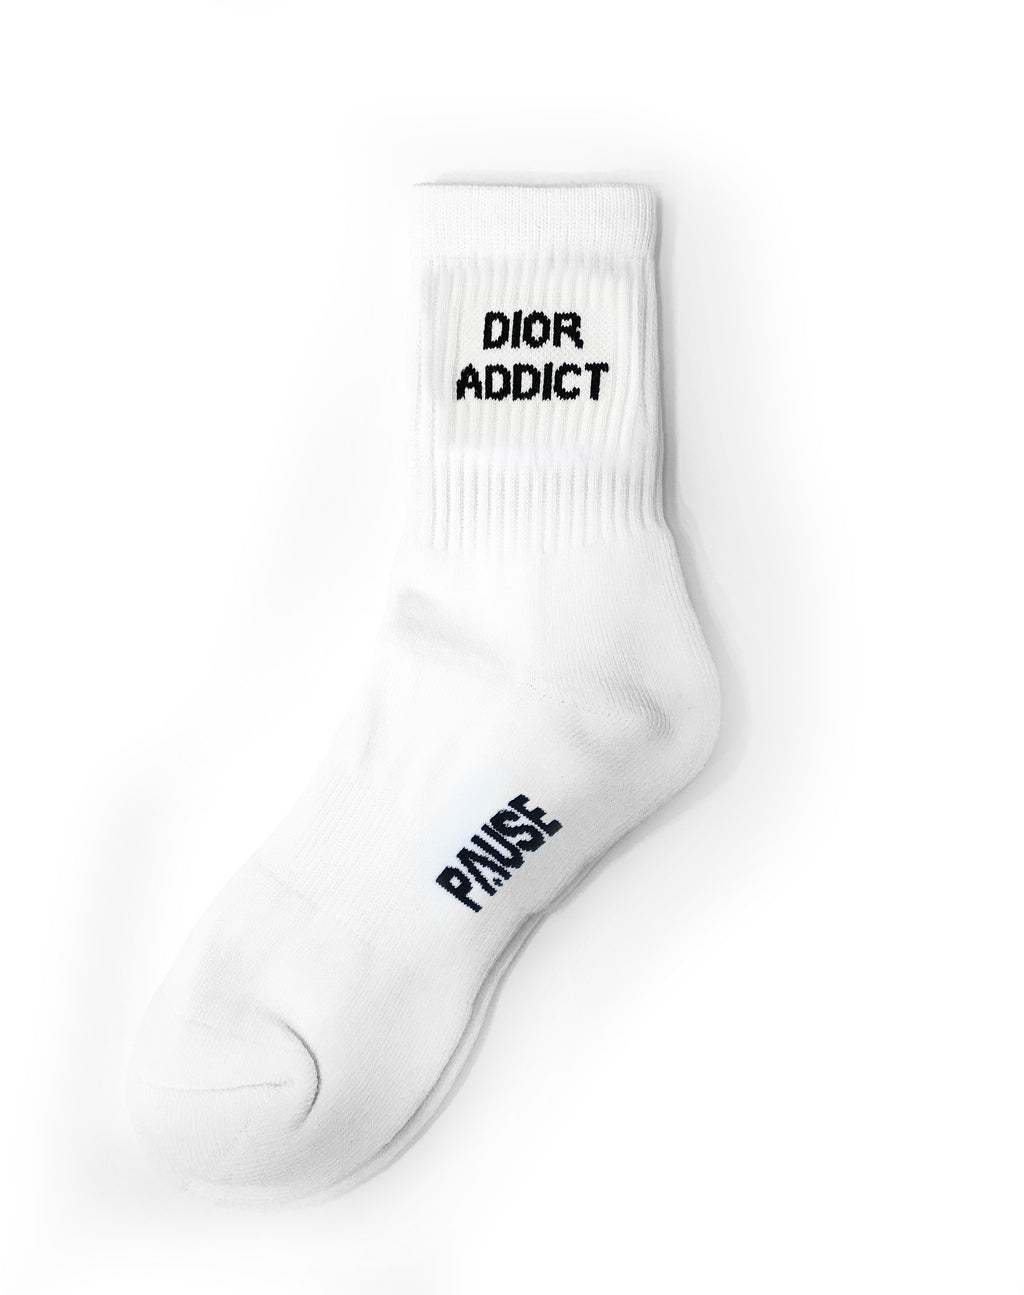 PAUSE 'Dior Addict' Socks